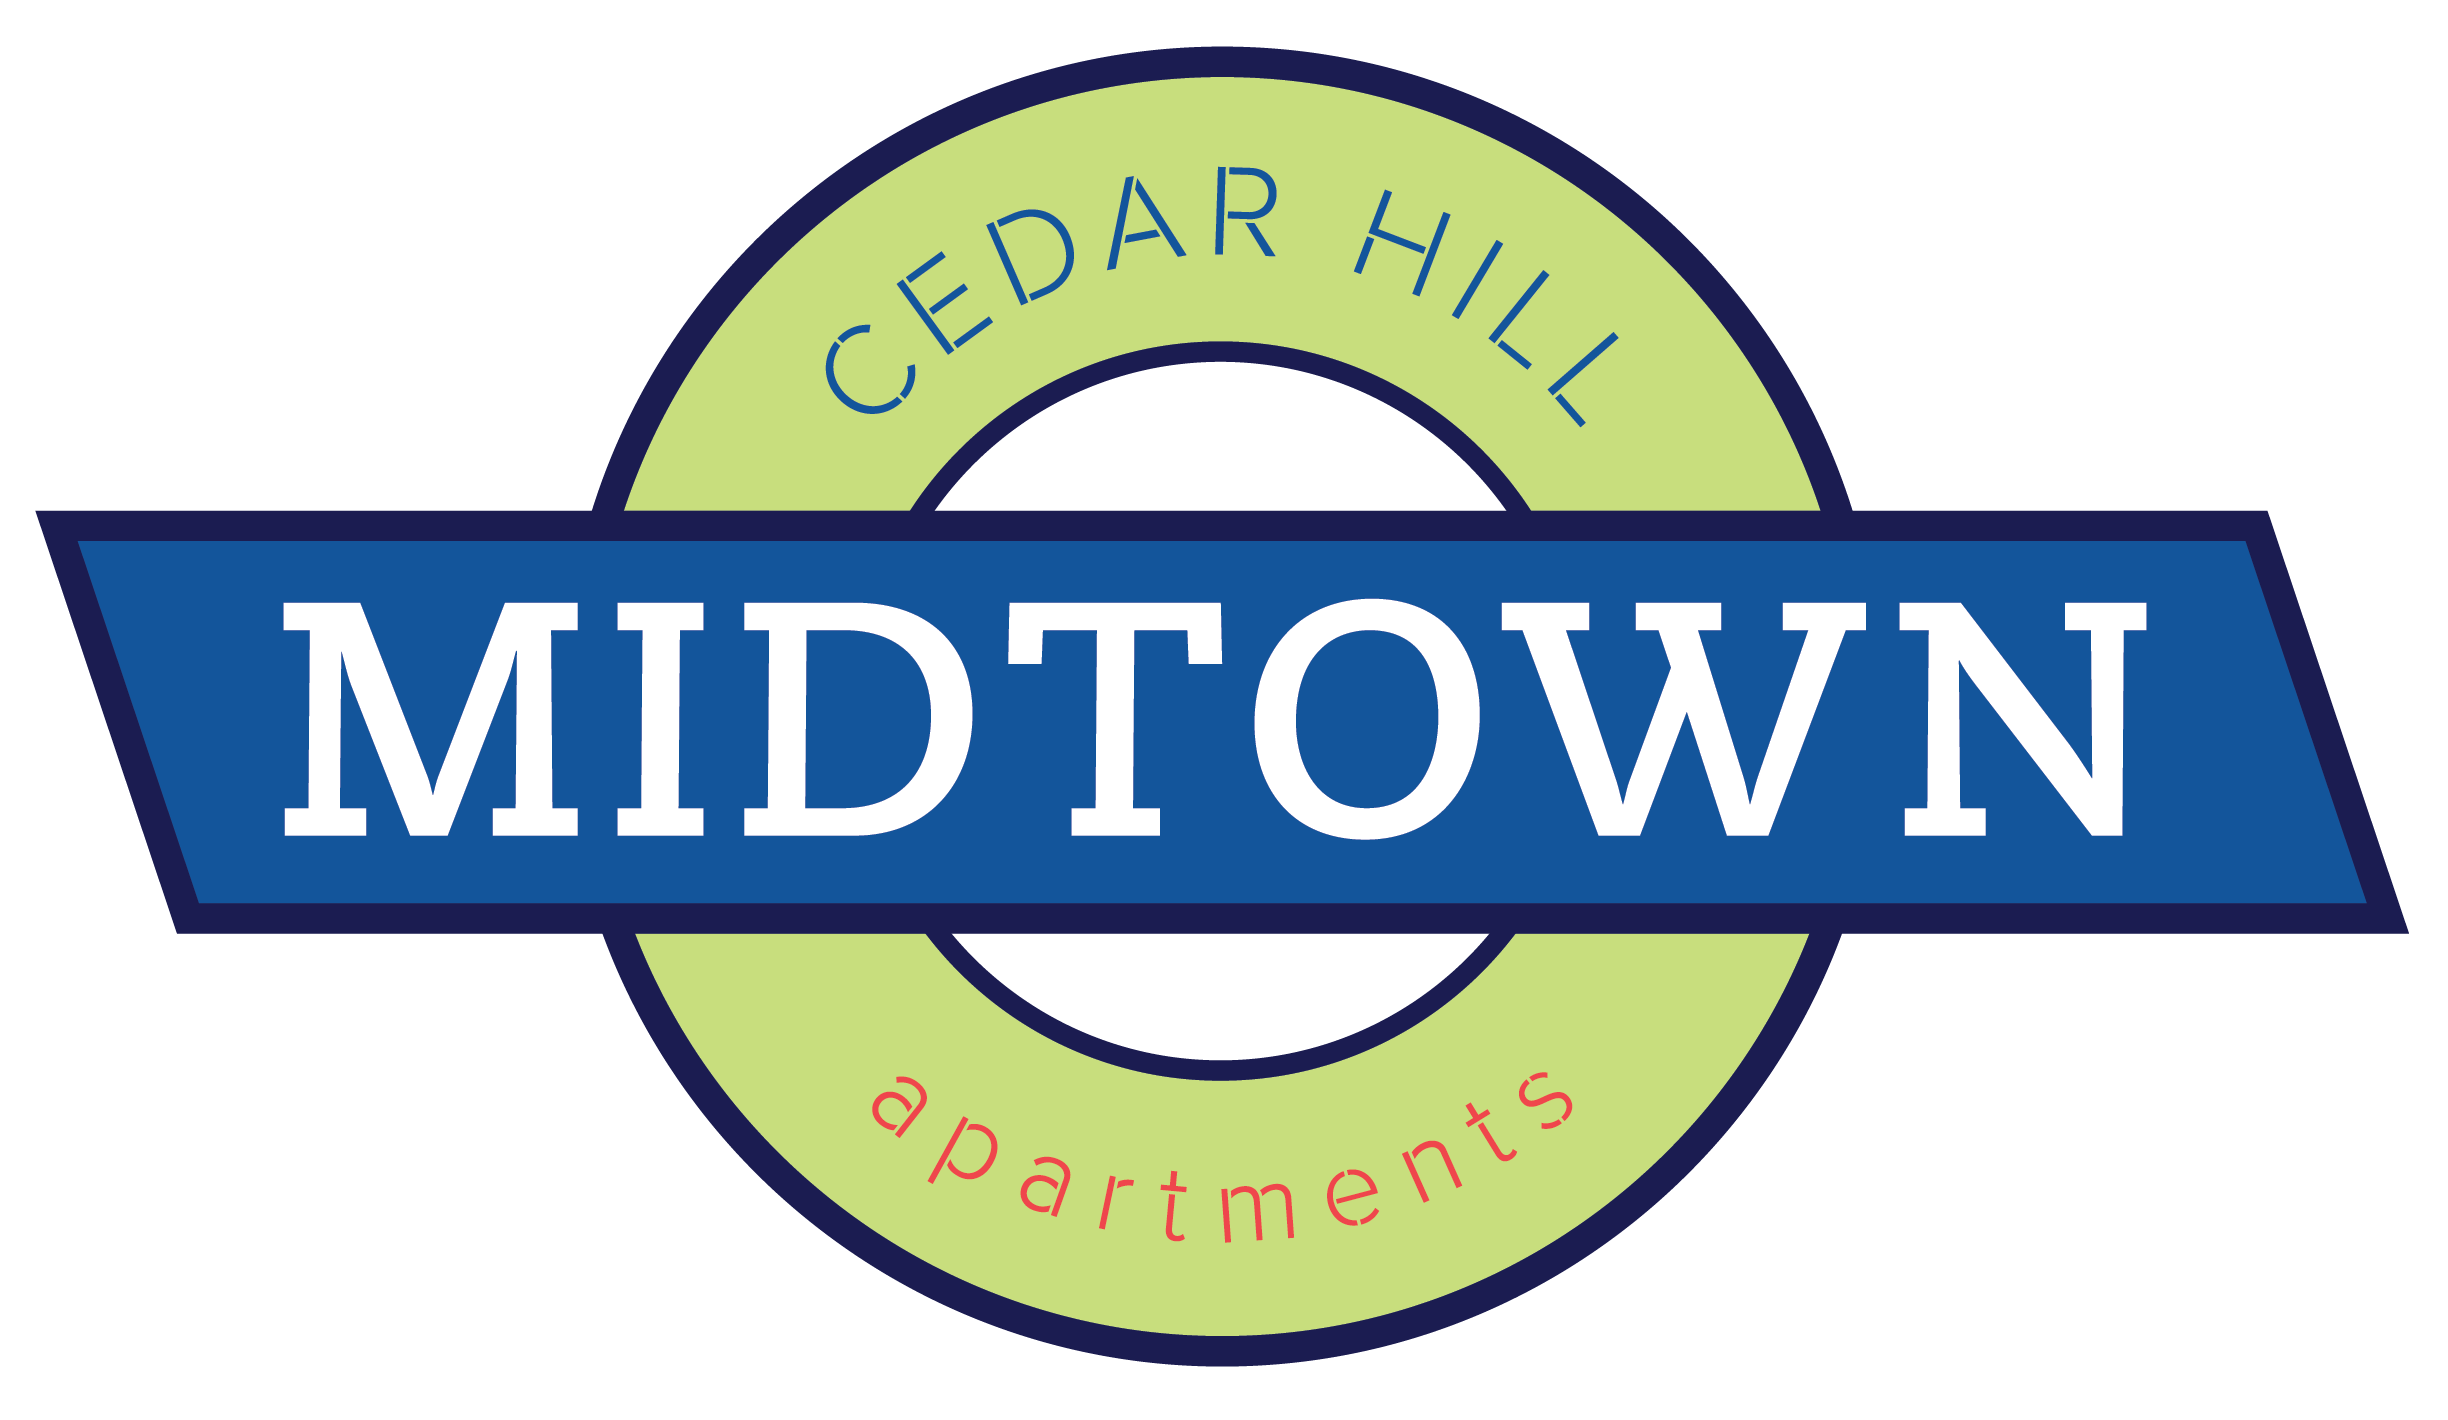 Midtown Cedar Hill Apartments Logo